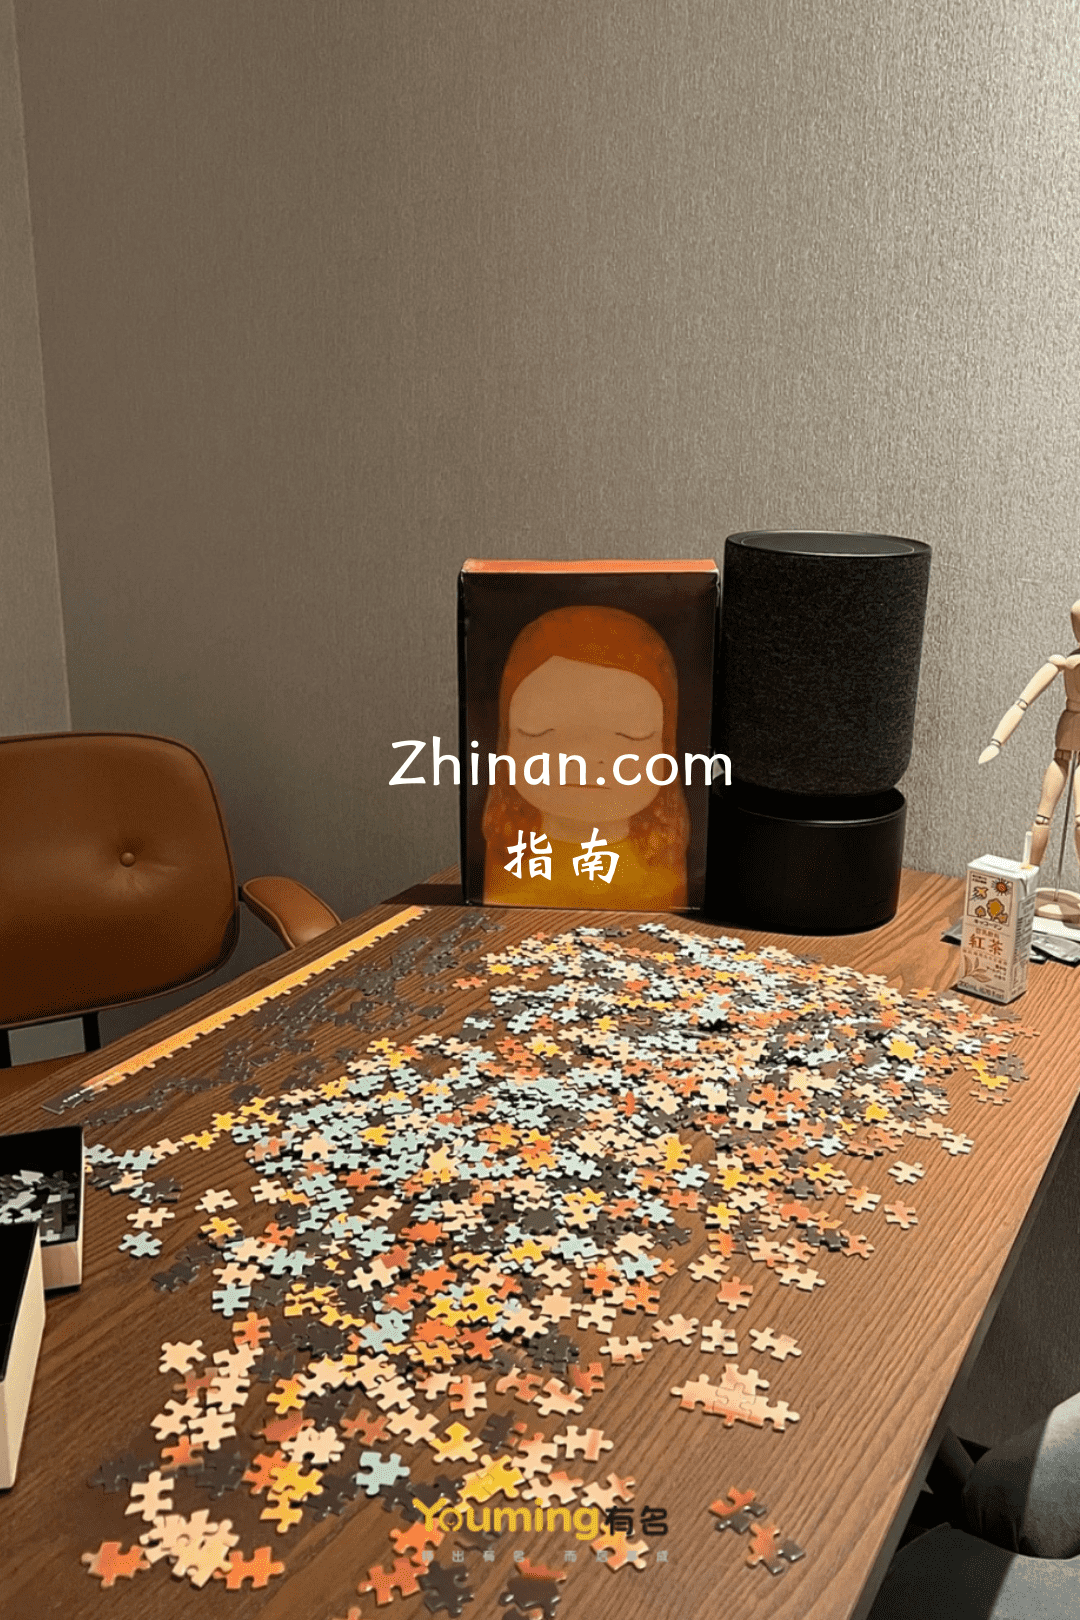 Zhinan.com